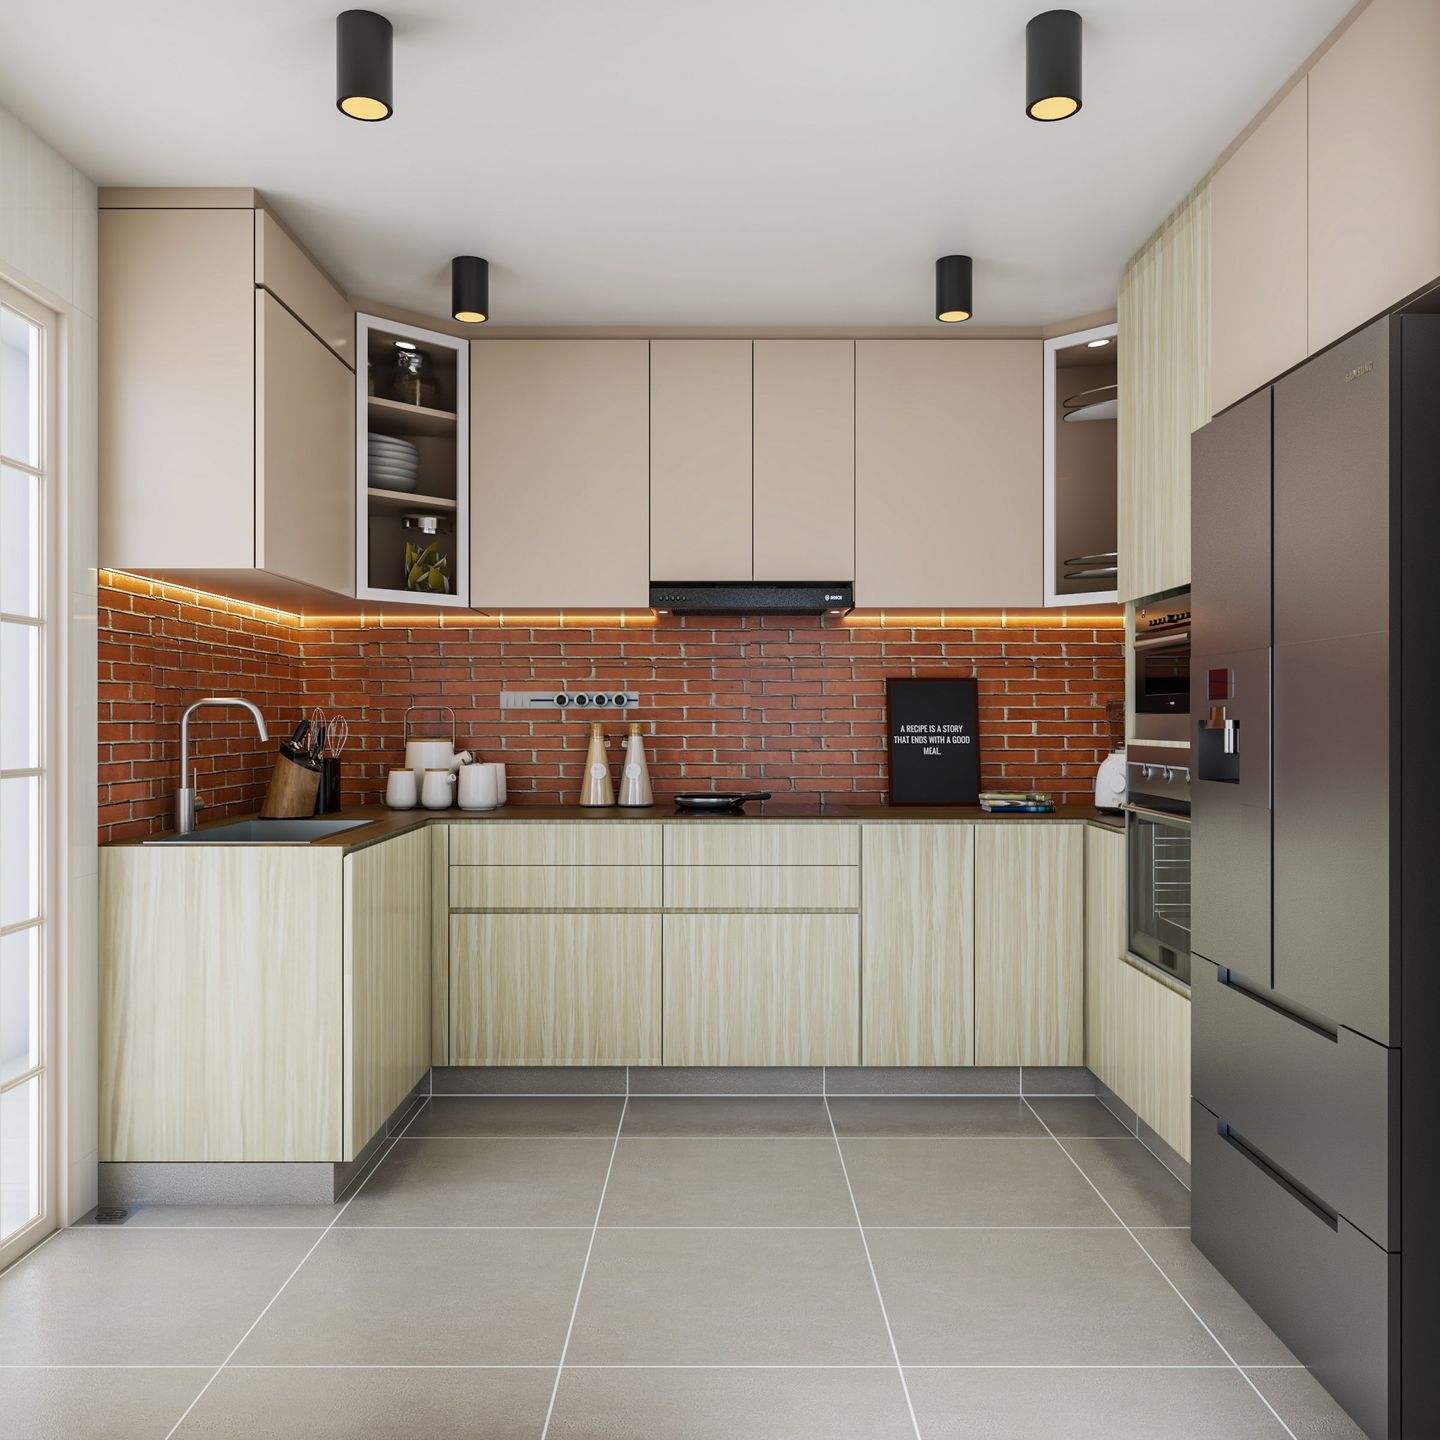 Beige And Brown Kitchen Design With Textured Dado Tiles - Livspace